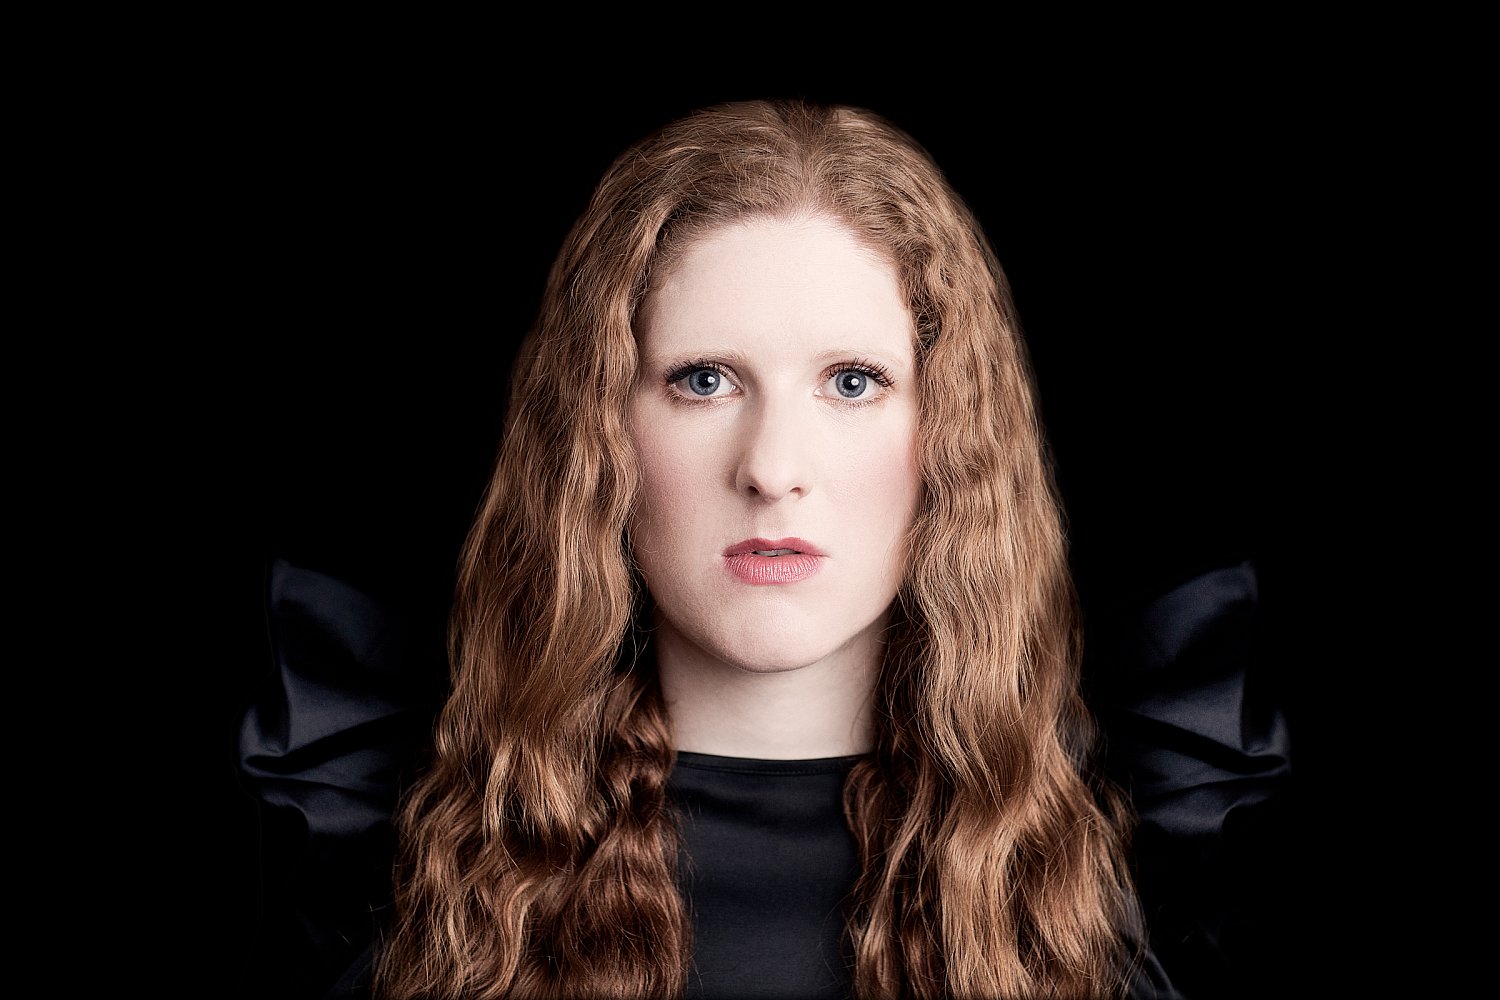 red-head-female-composer-cheryl-frances-hoad-portrait-on-black-ruffles-sleeves-mat-smith-photography.jpg